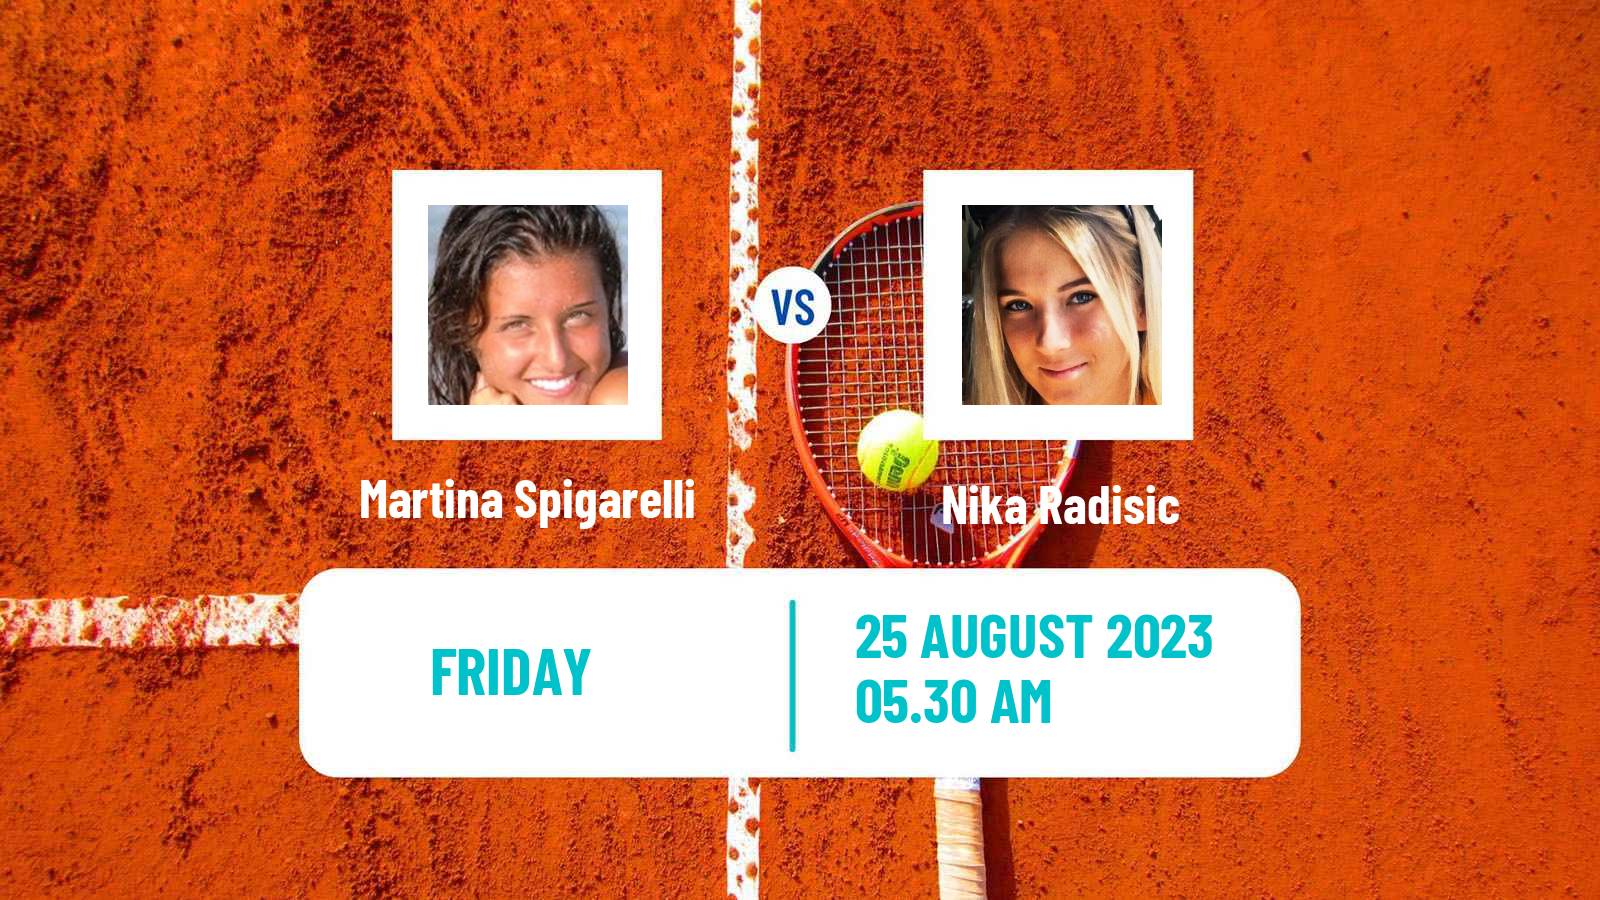 Tennis ITF W25 Bydgoszcz Women Martina Spigarelli - Nika Radisic